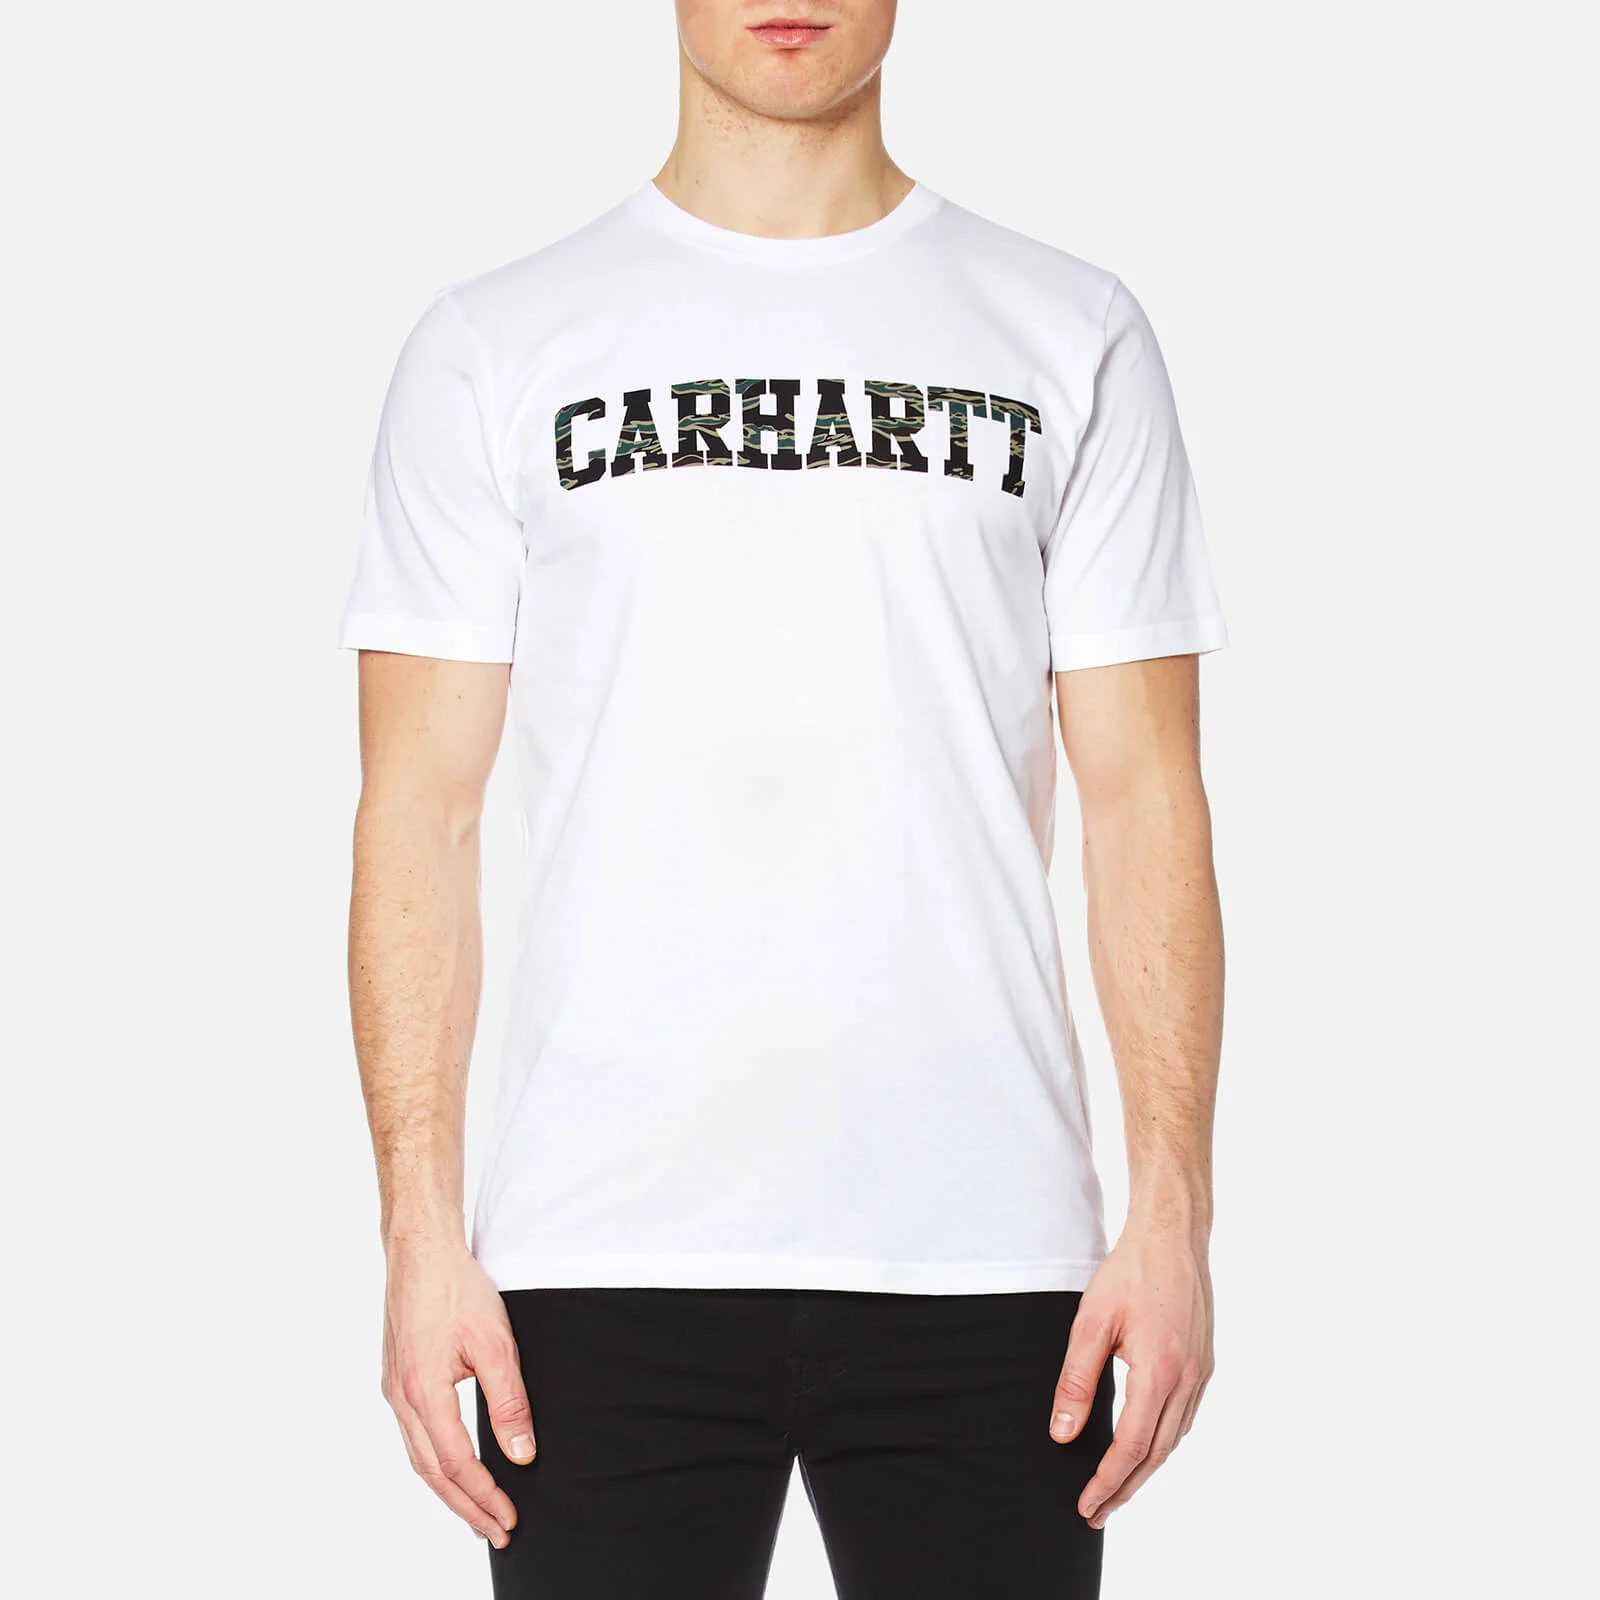 Carhartt Men's Short Sleeve College T-Shirt - White/Tiger Camo Image 1